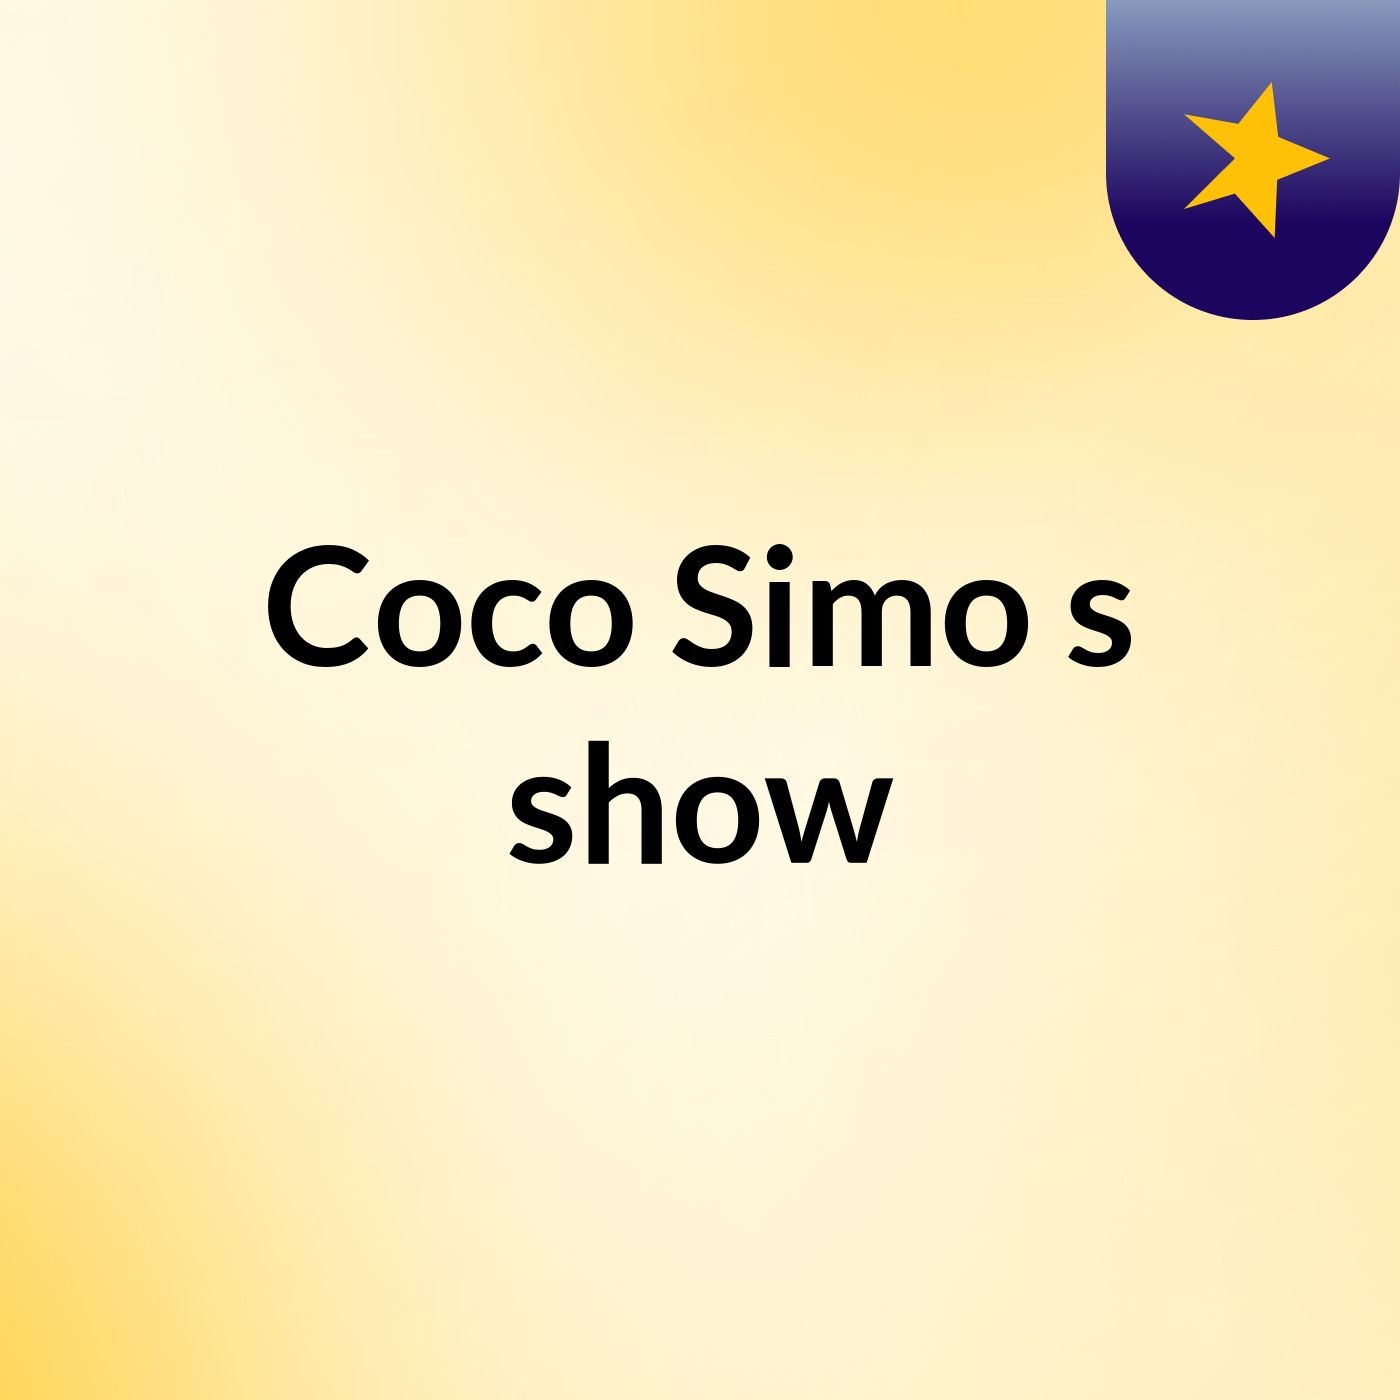 Coco Simo's show